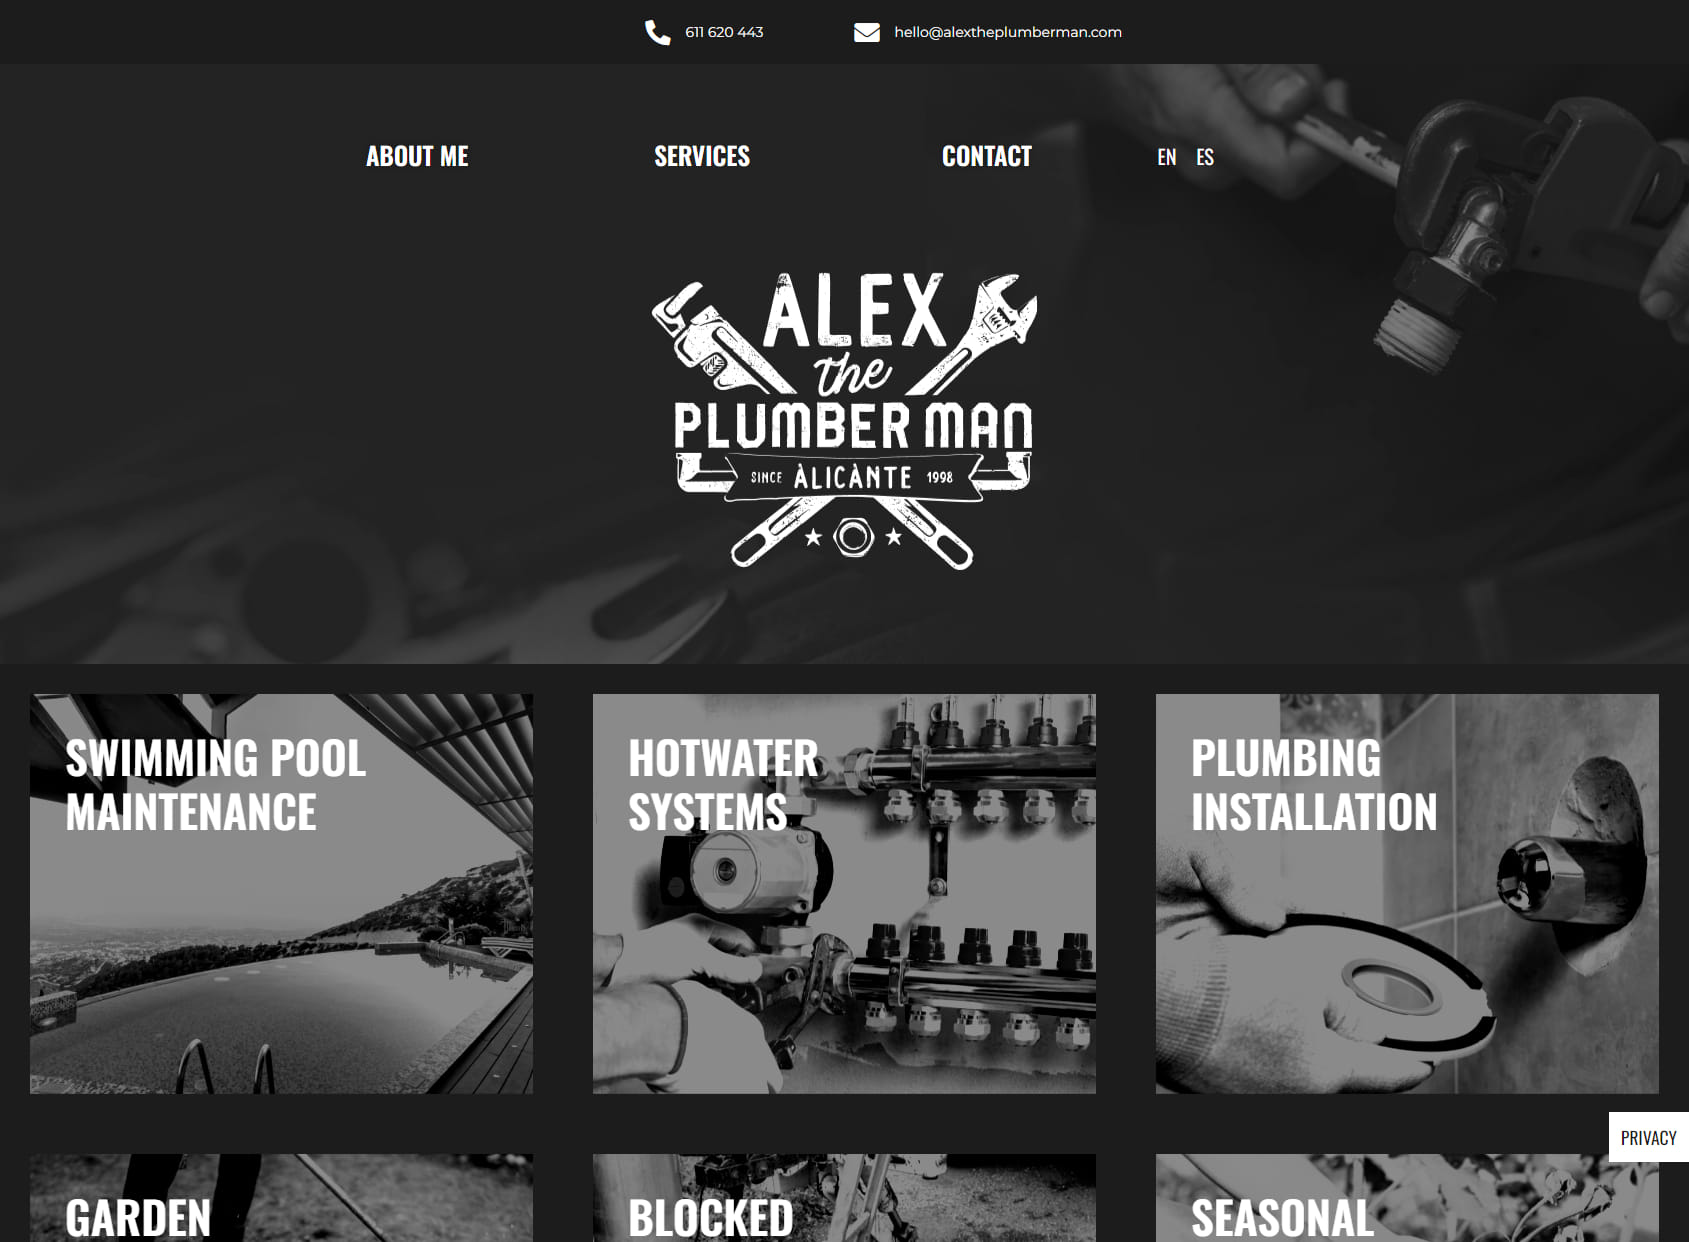 Alex The Plumber Man